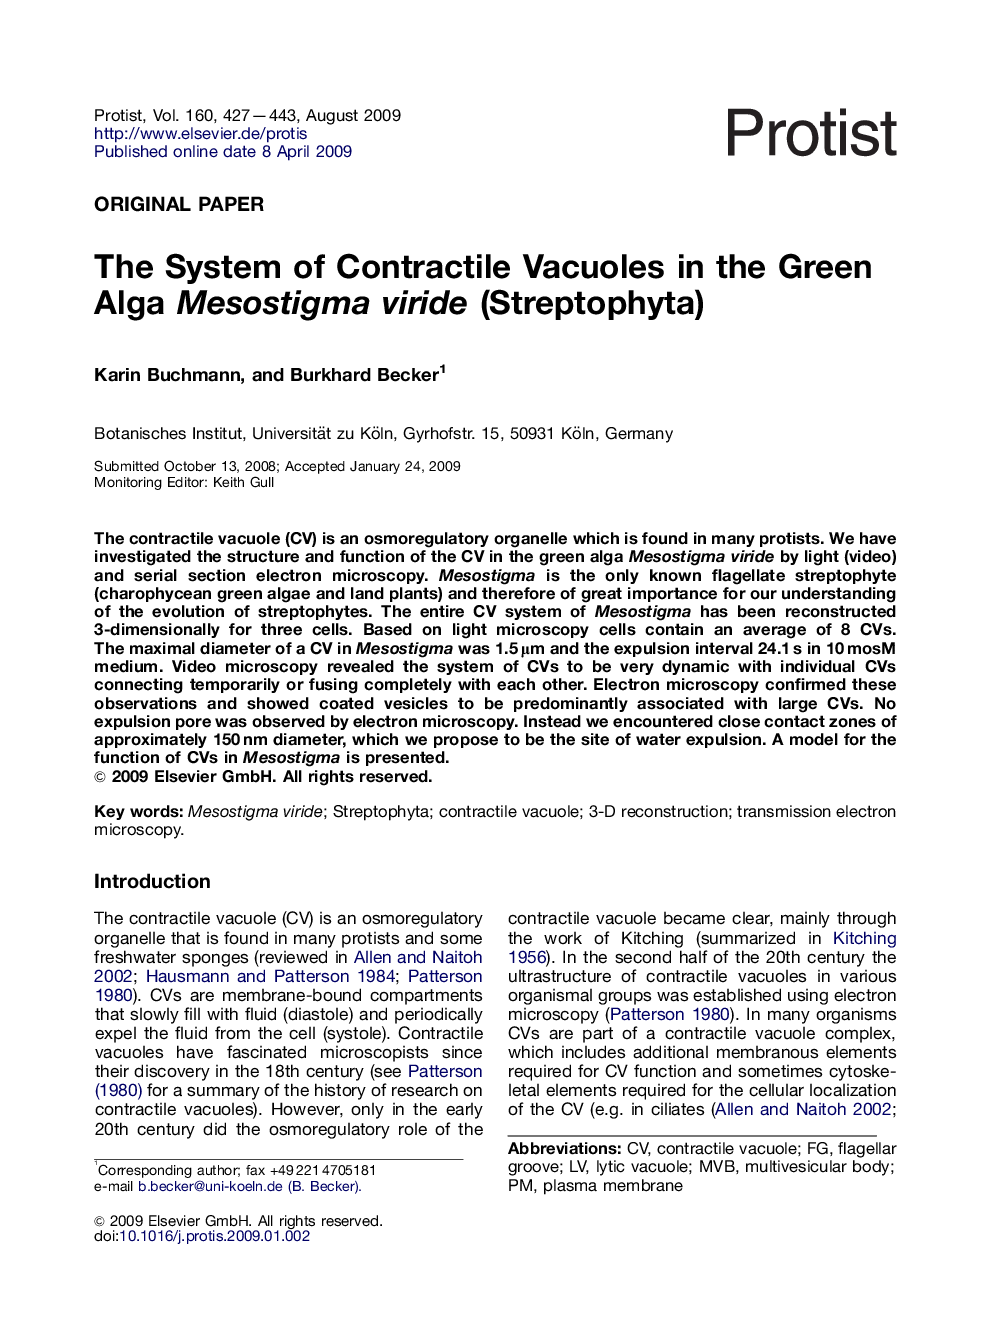 The System of Contractile Vacuoles in the Green Alga Mesostigma viride (Streptophyta)